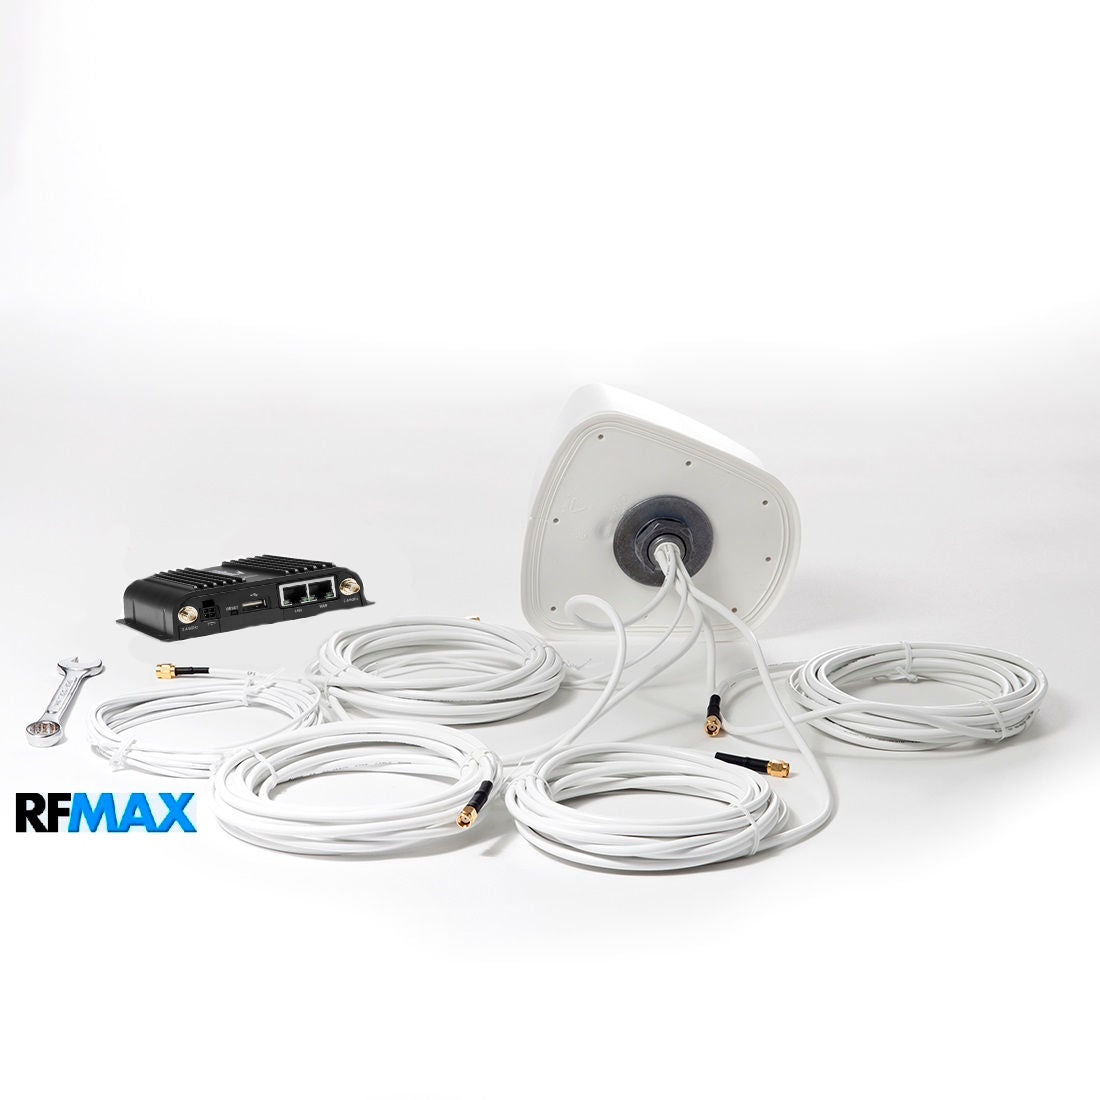 Vehicular Antenna for IBR900 Cradlepoint Modem Router White